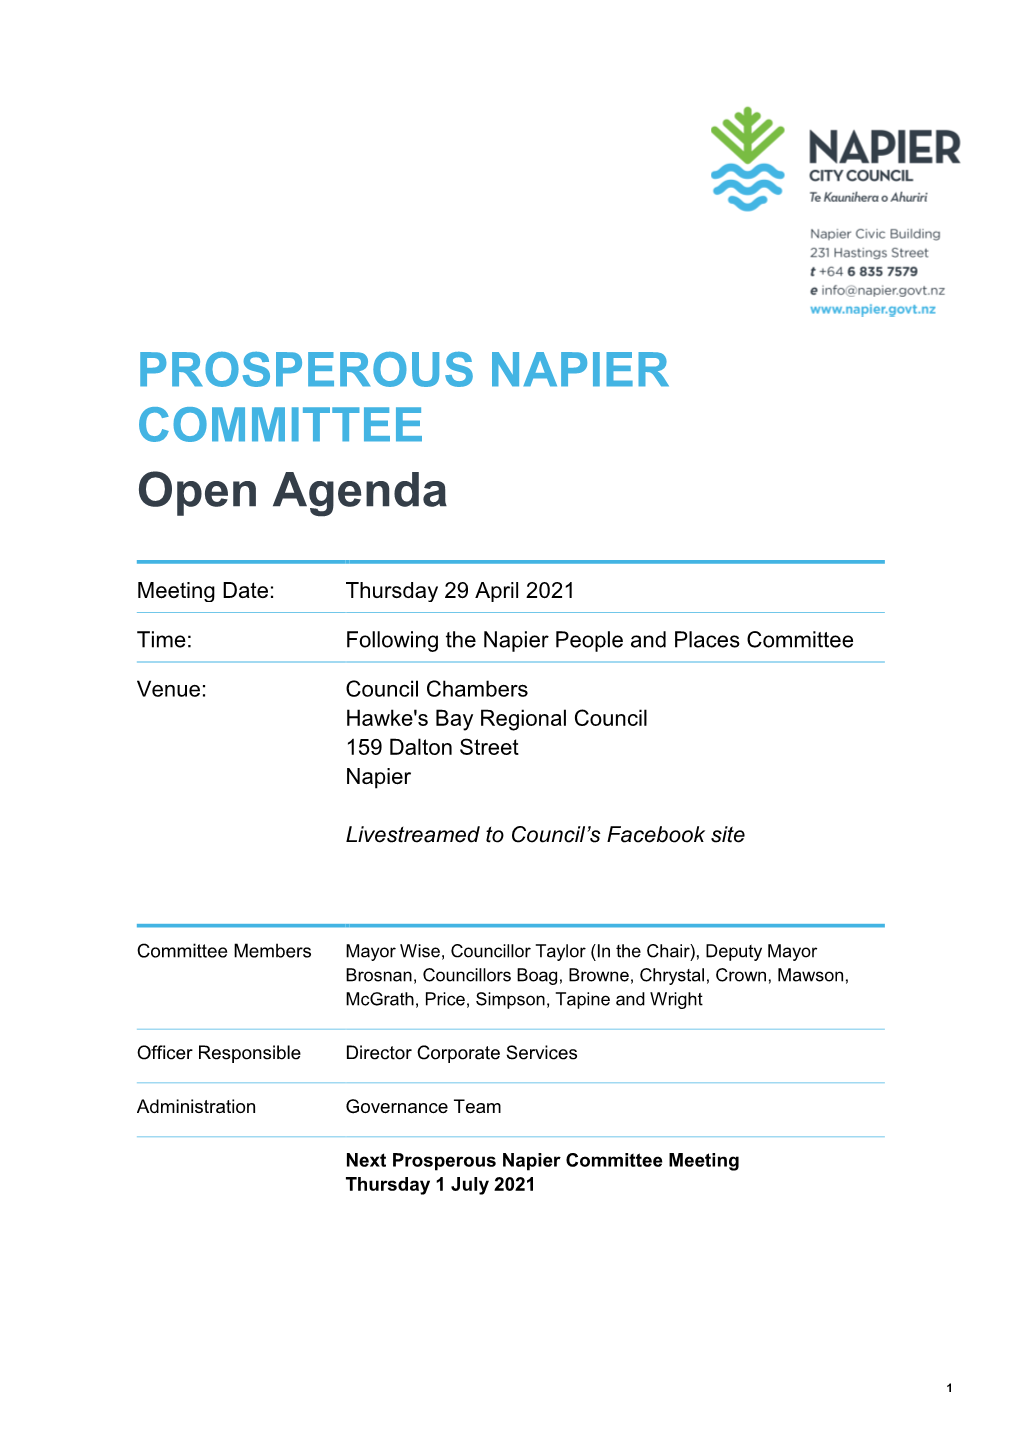 Agenda of Prosperous Napier Committee